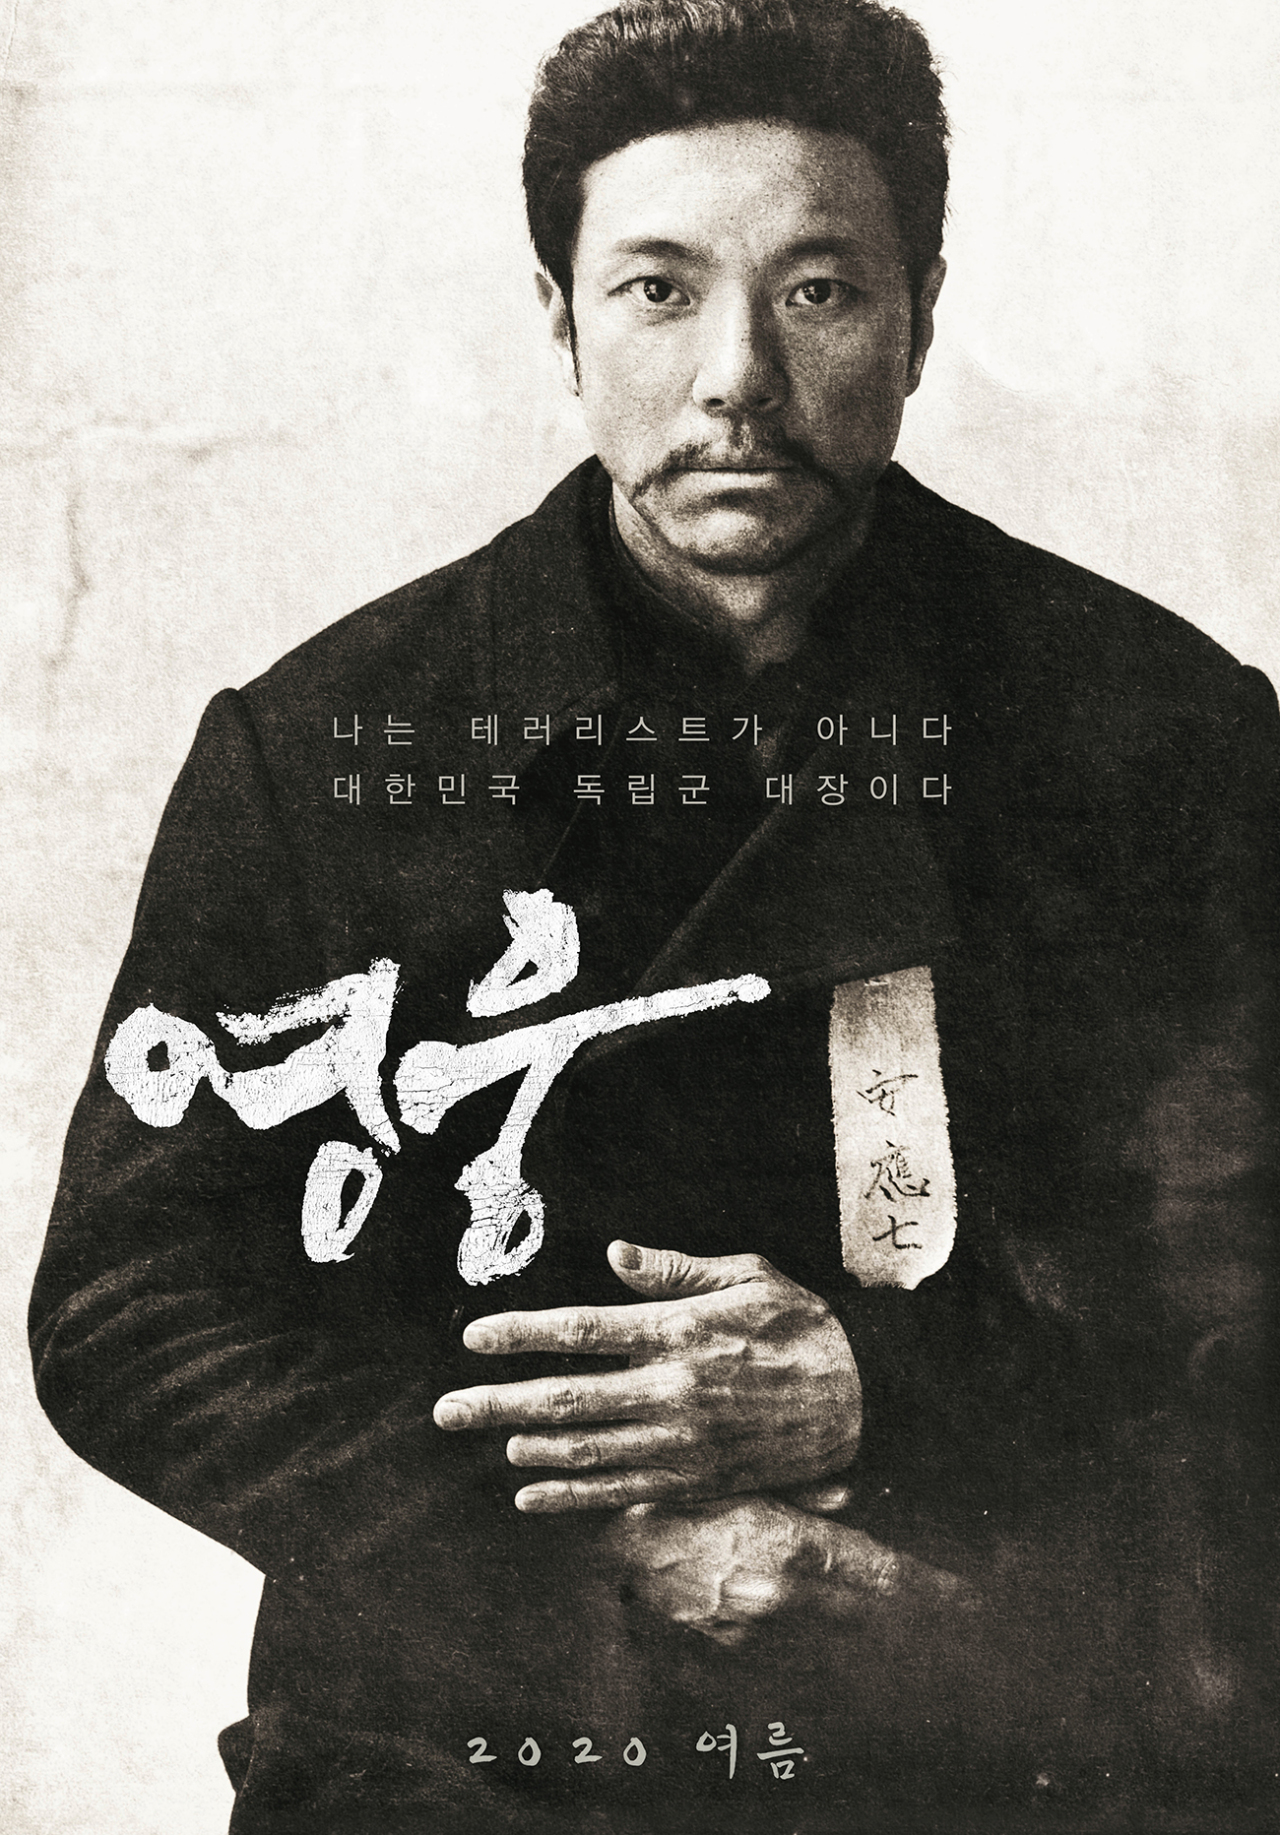 Poster of film “Hero” (CJ Entertainment)